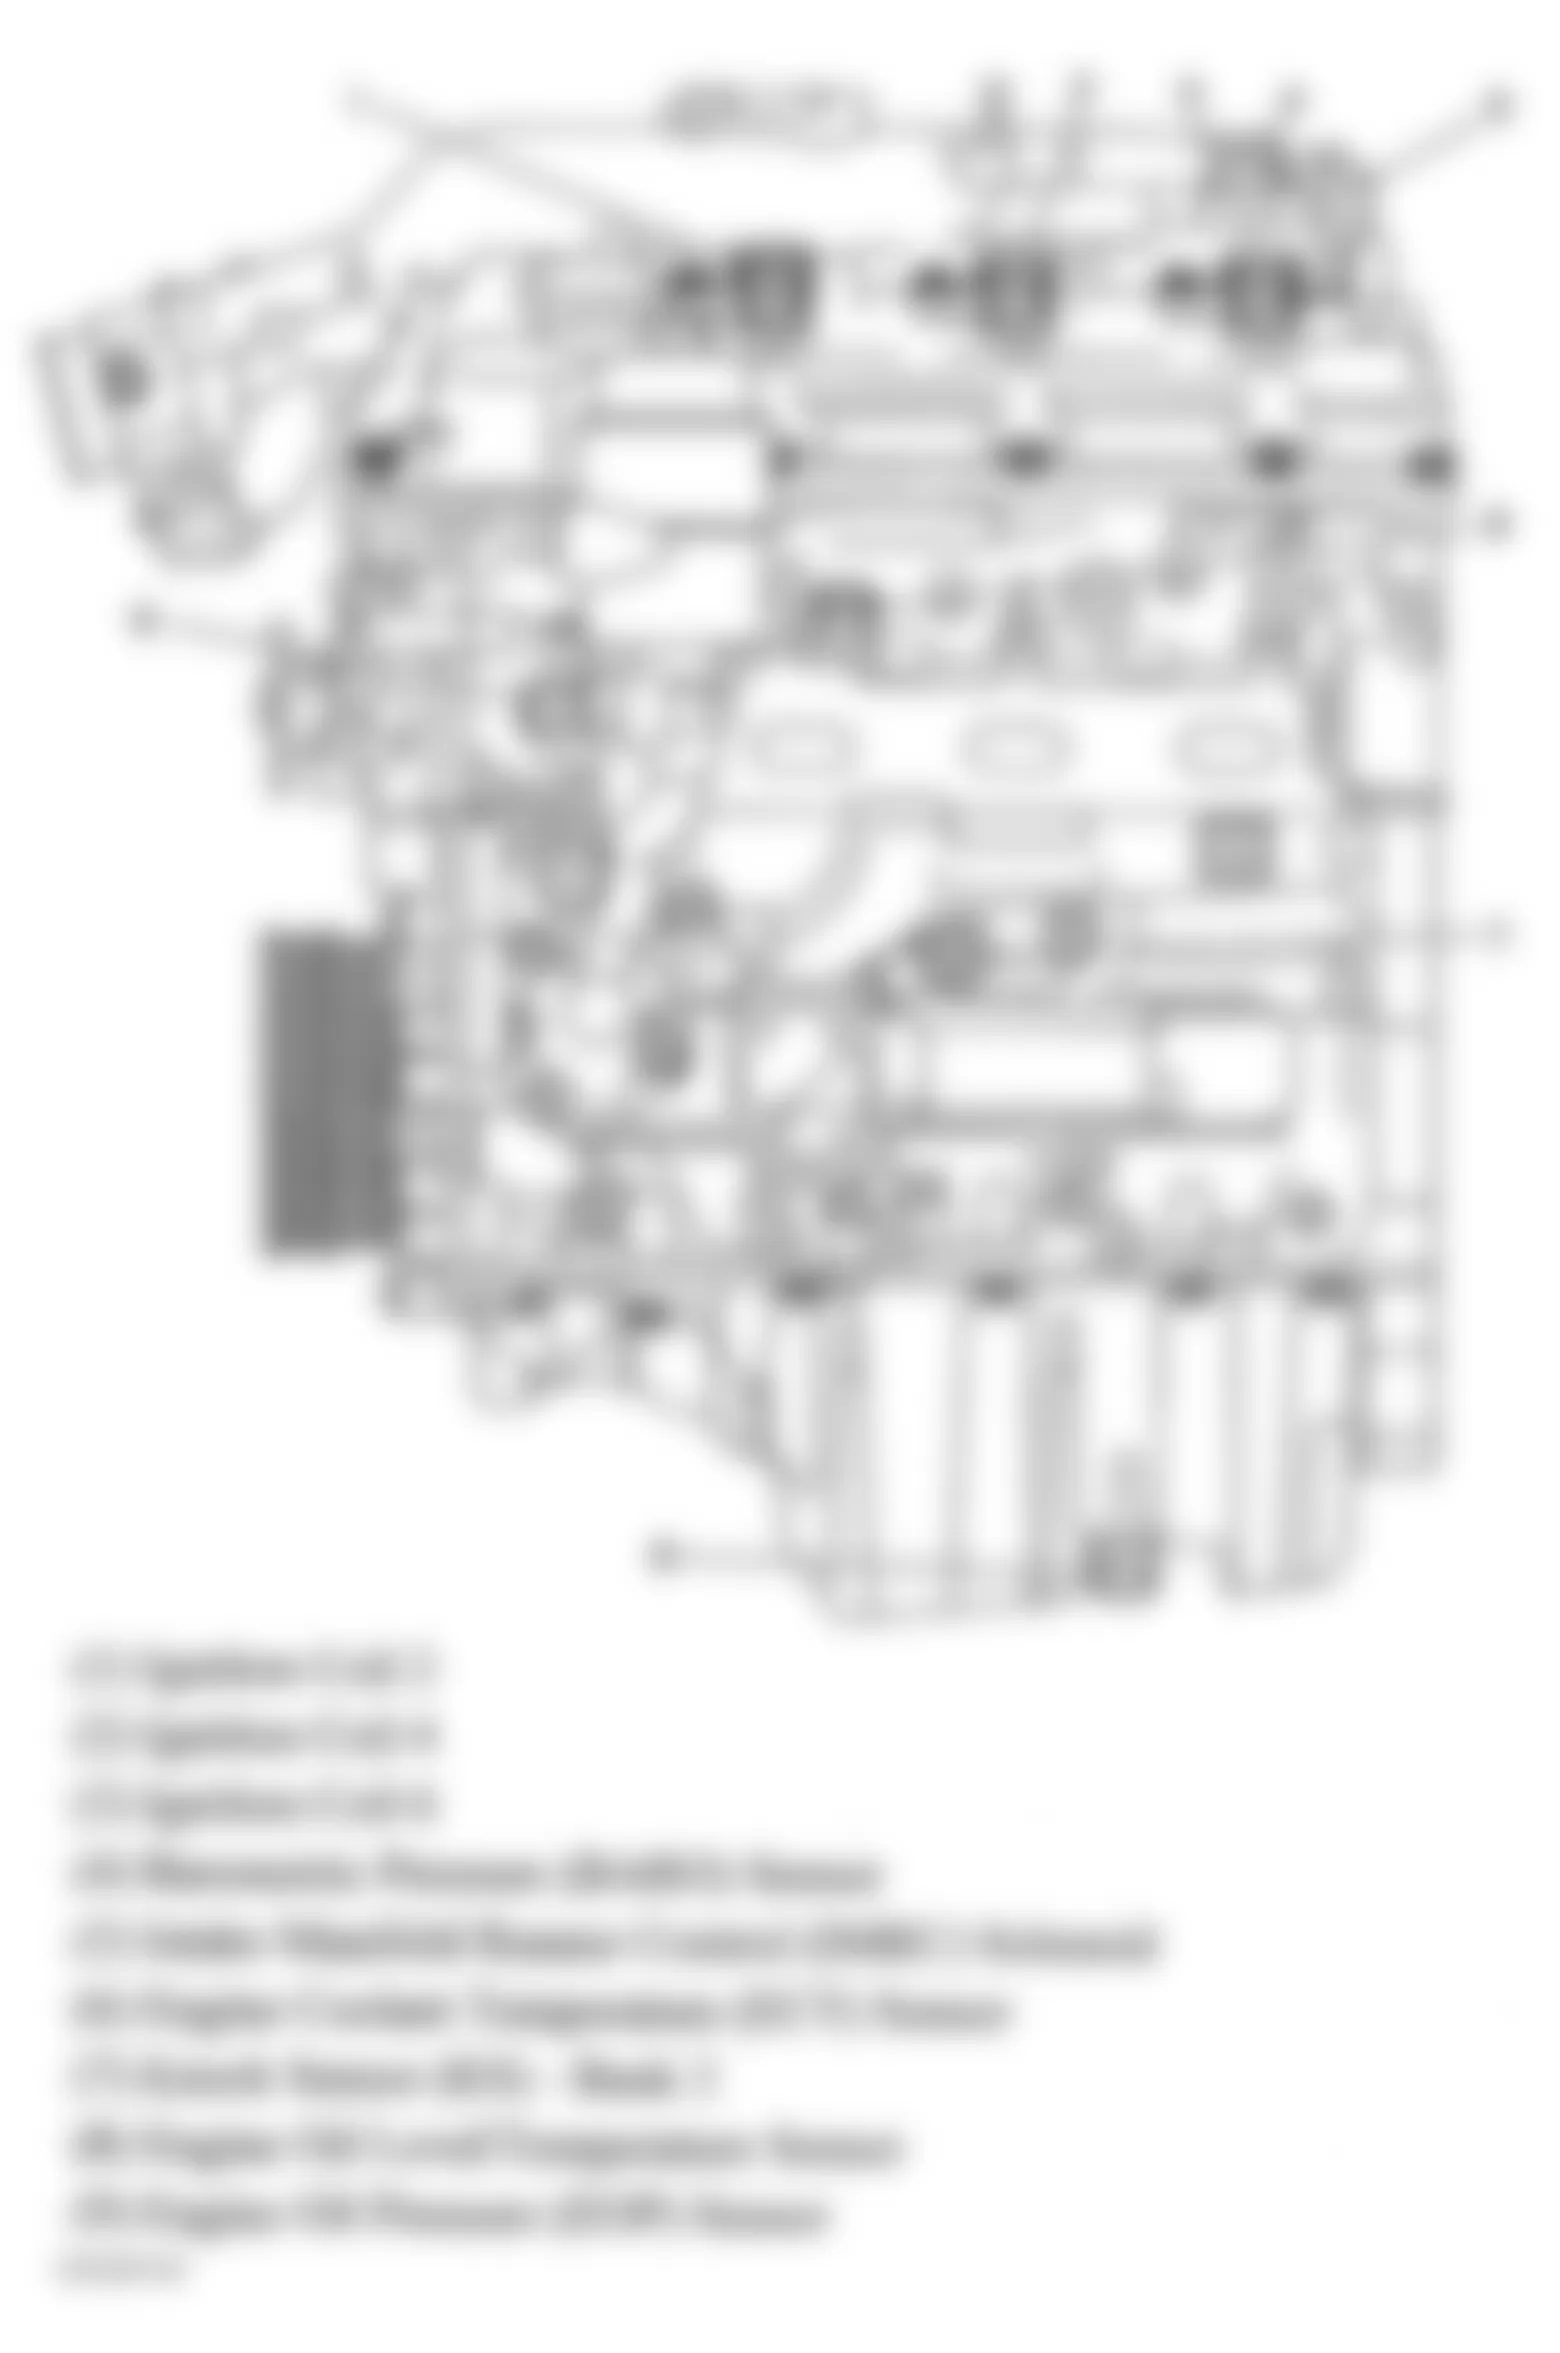 Buick Allure CXS 2005 - Component Locations -  Engine Control Components (3.6L)